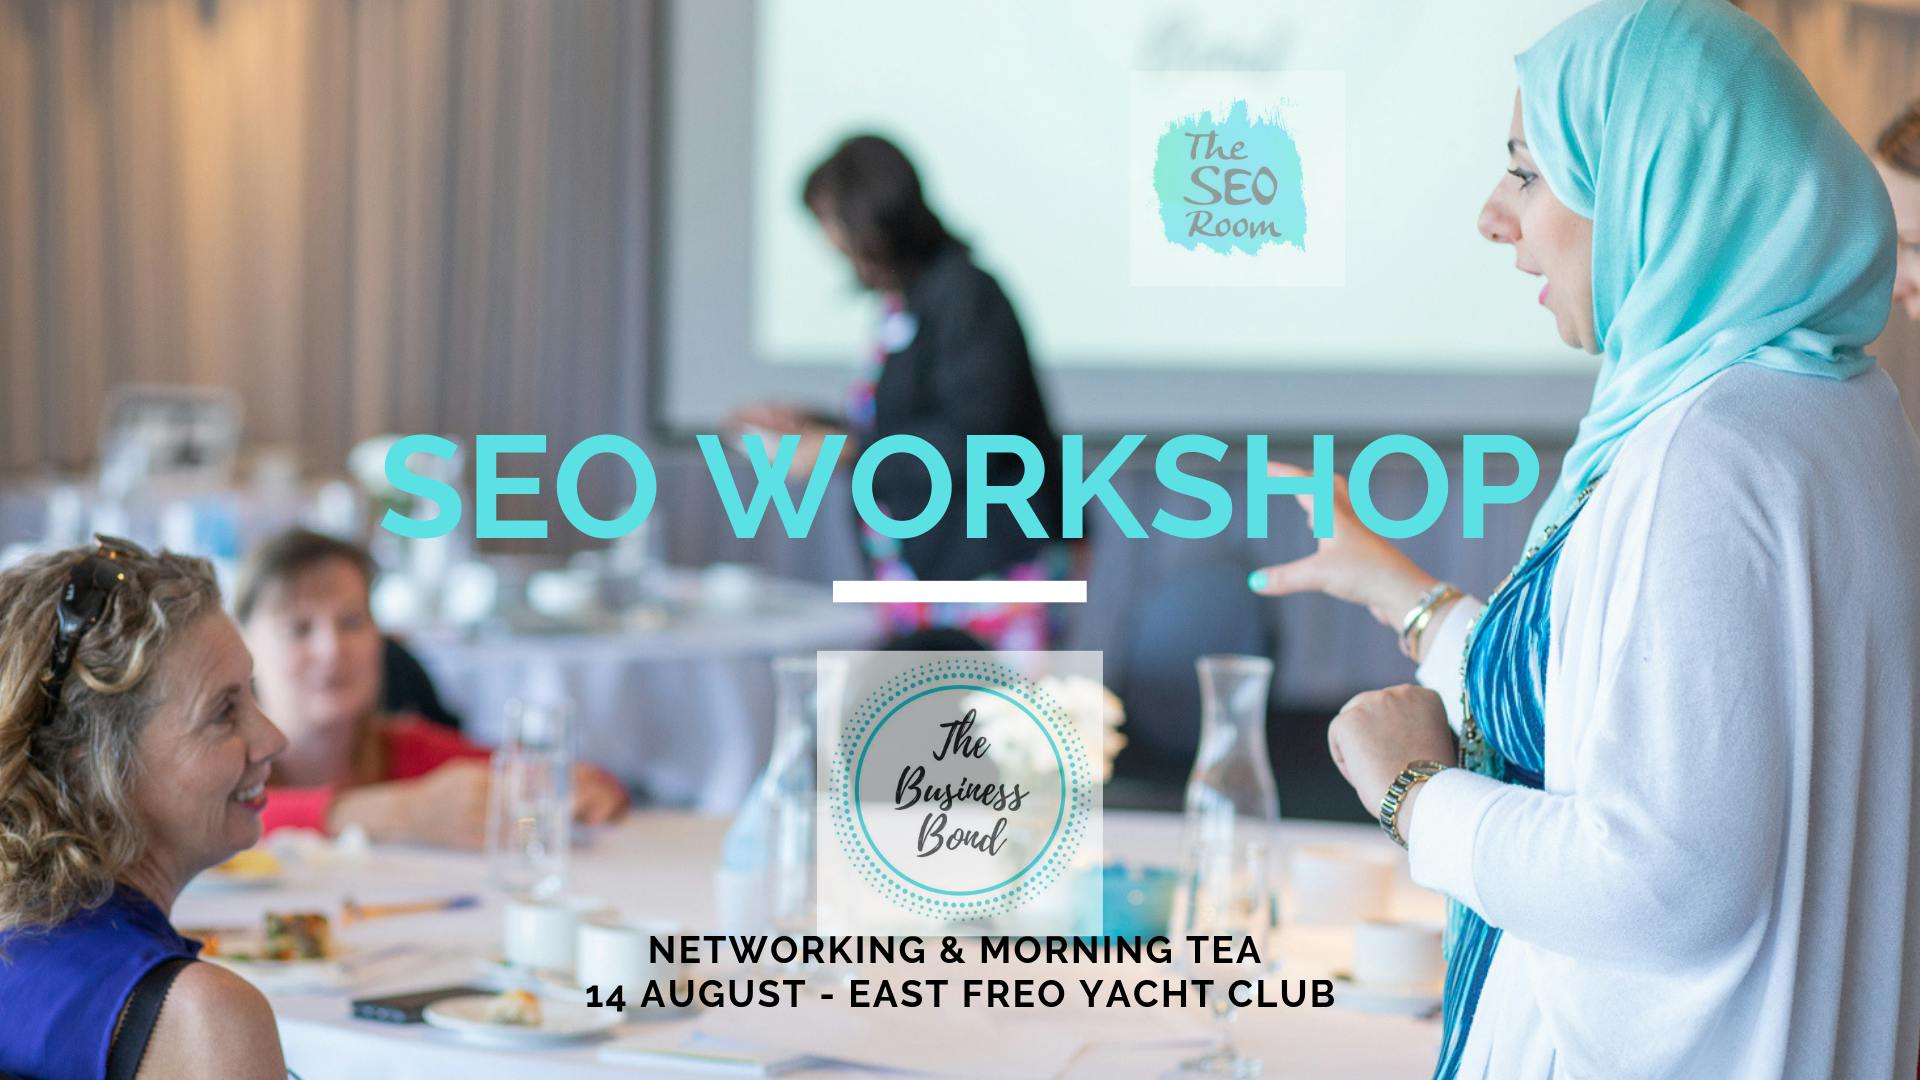 Holistic SEO Workshop Perth & Networking - The Business Bond